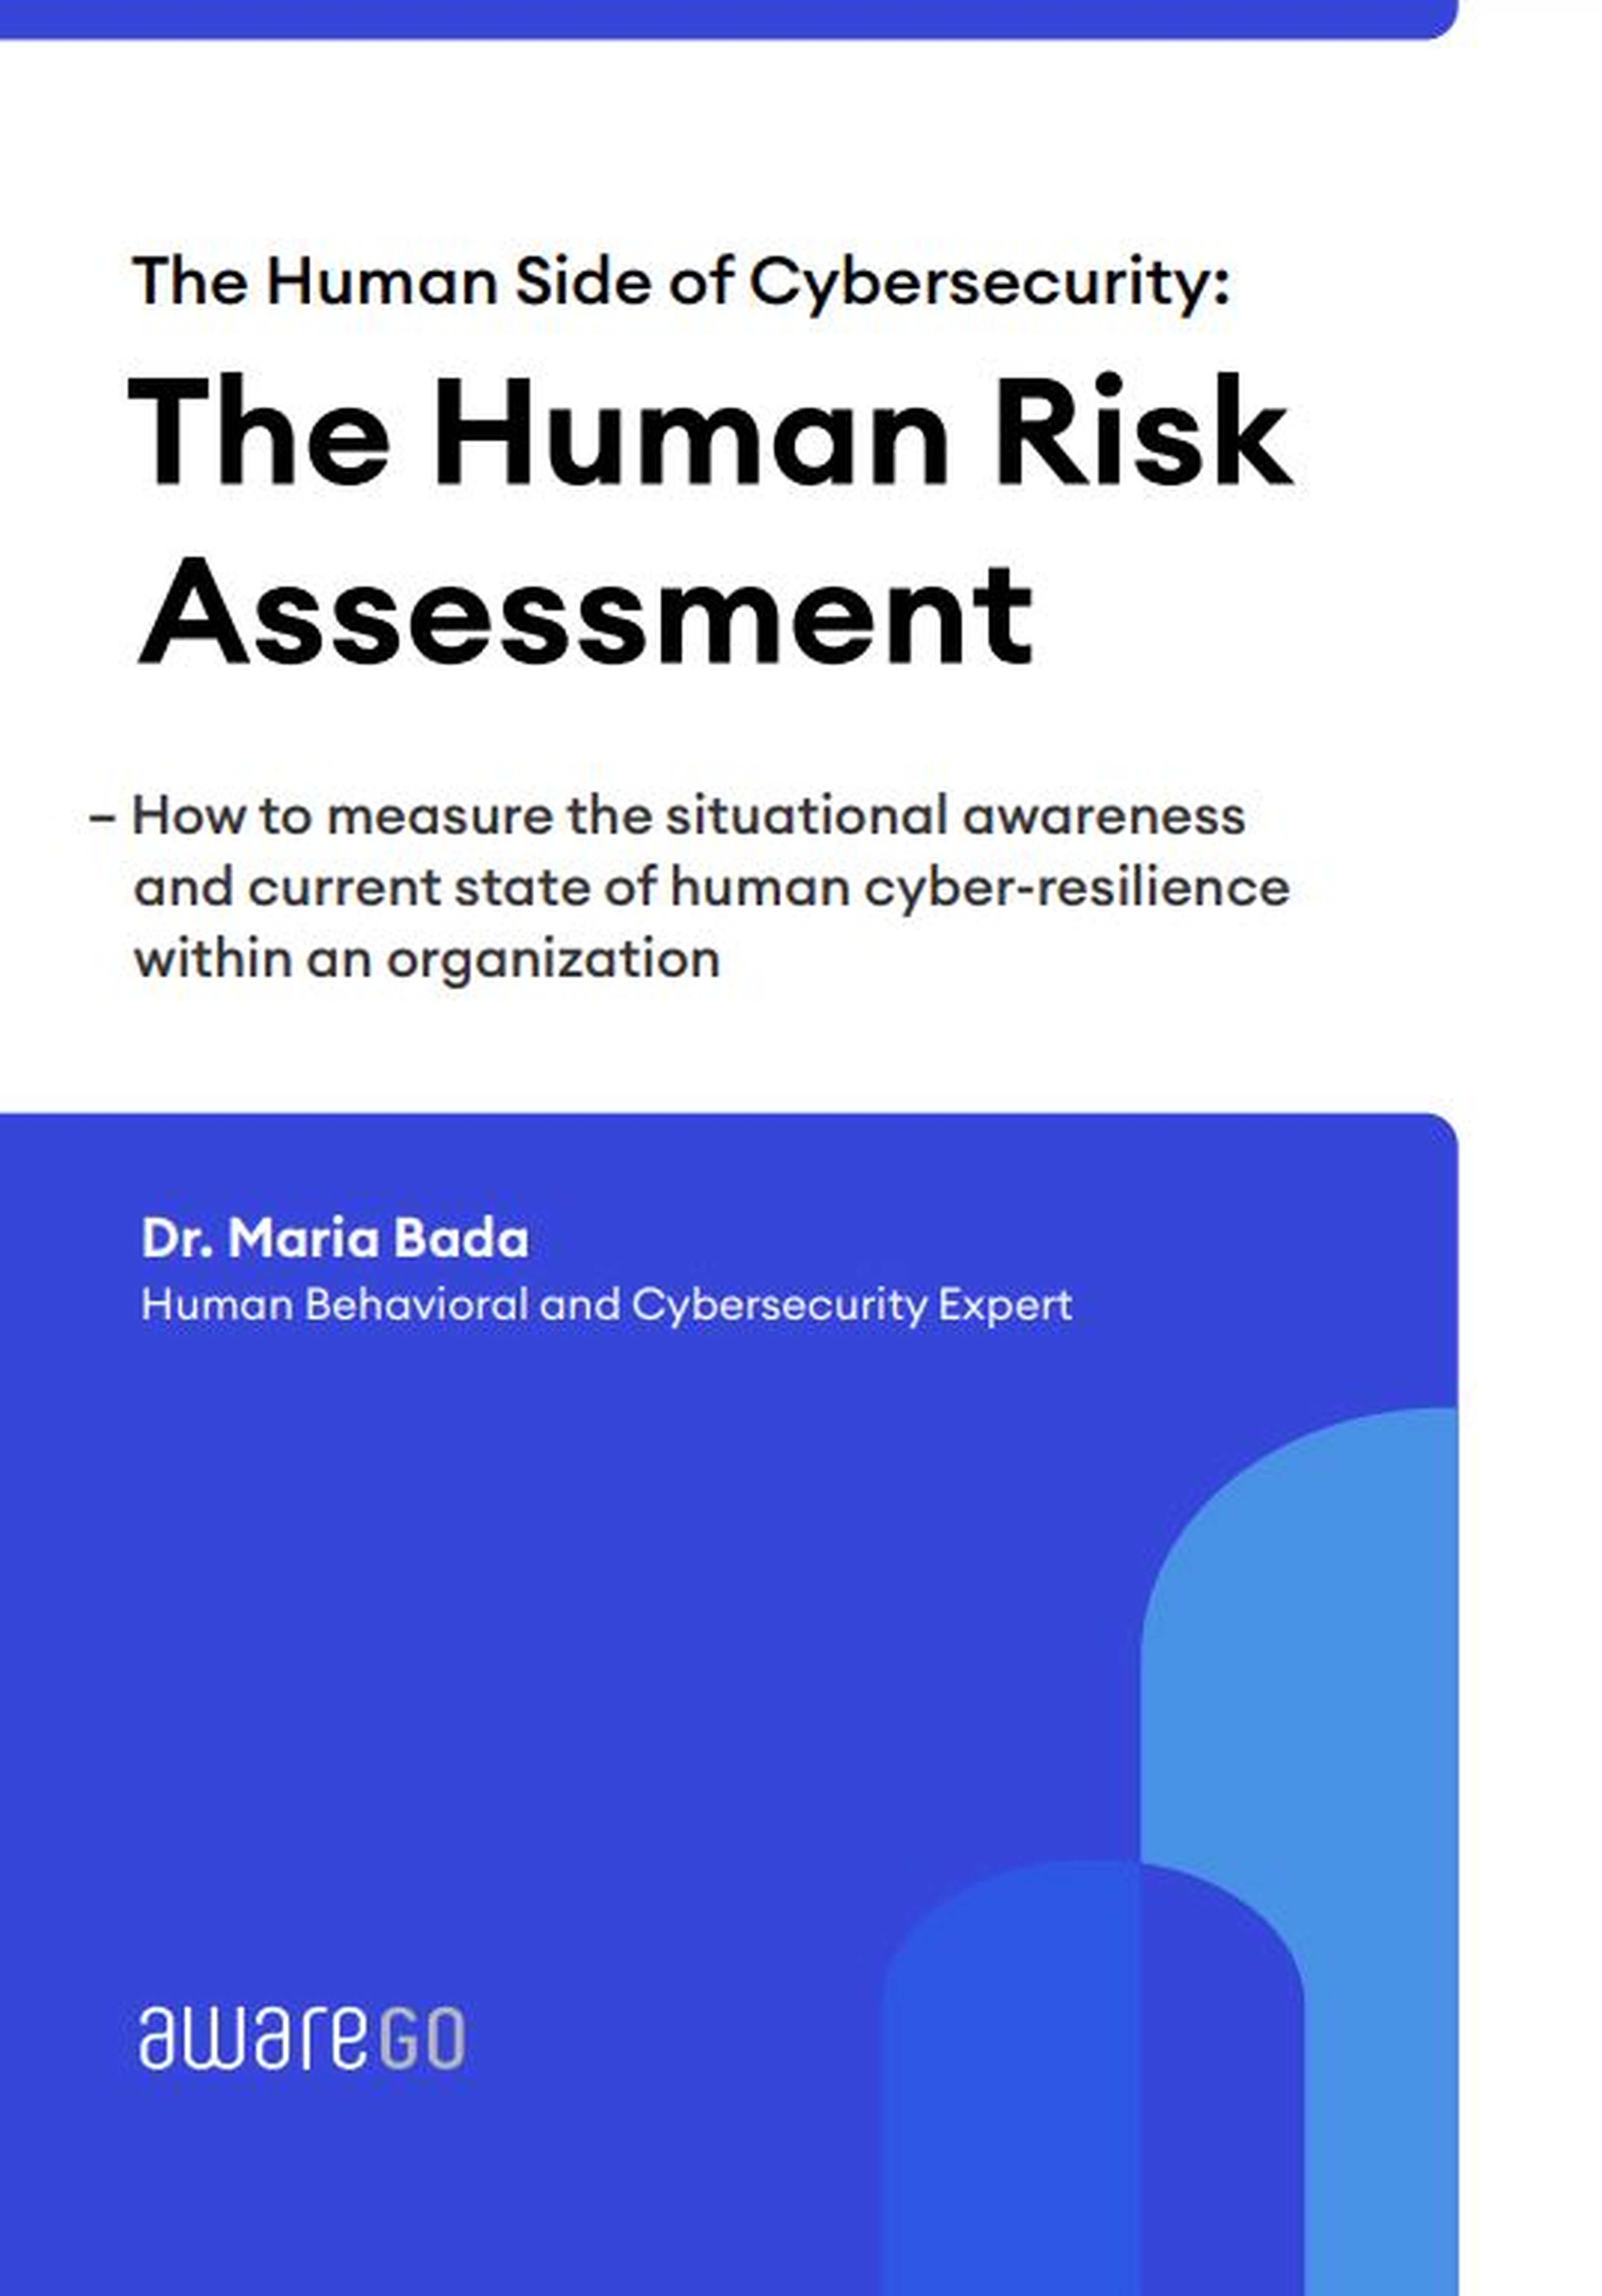 The Human Risk Assessment